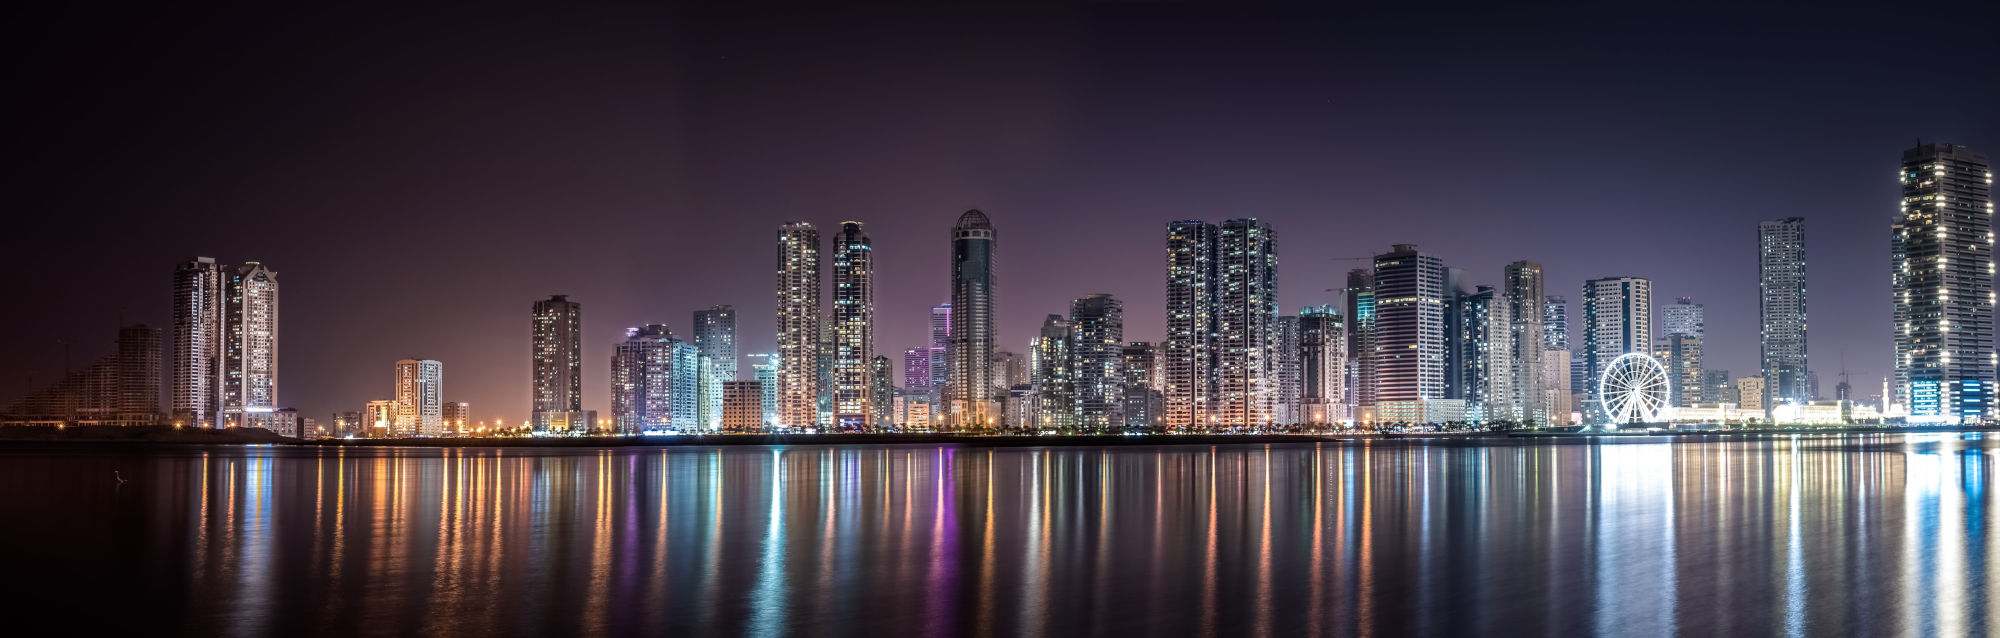 nighttime city skyline with tall buildings